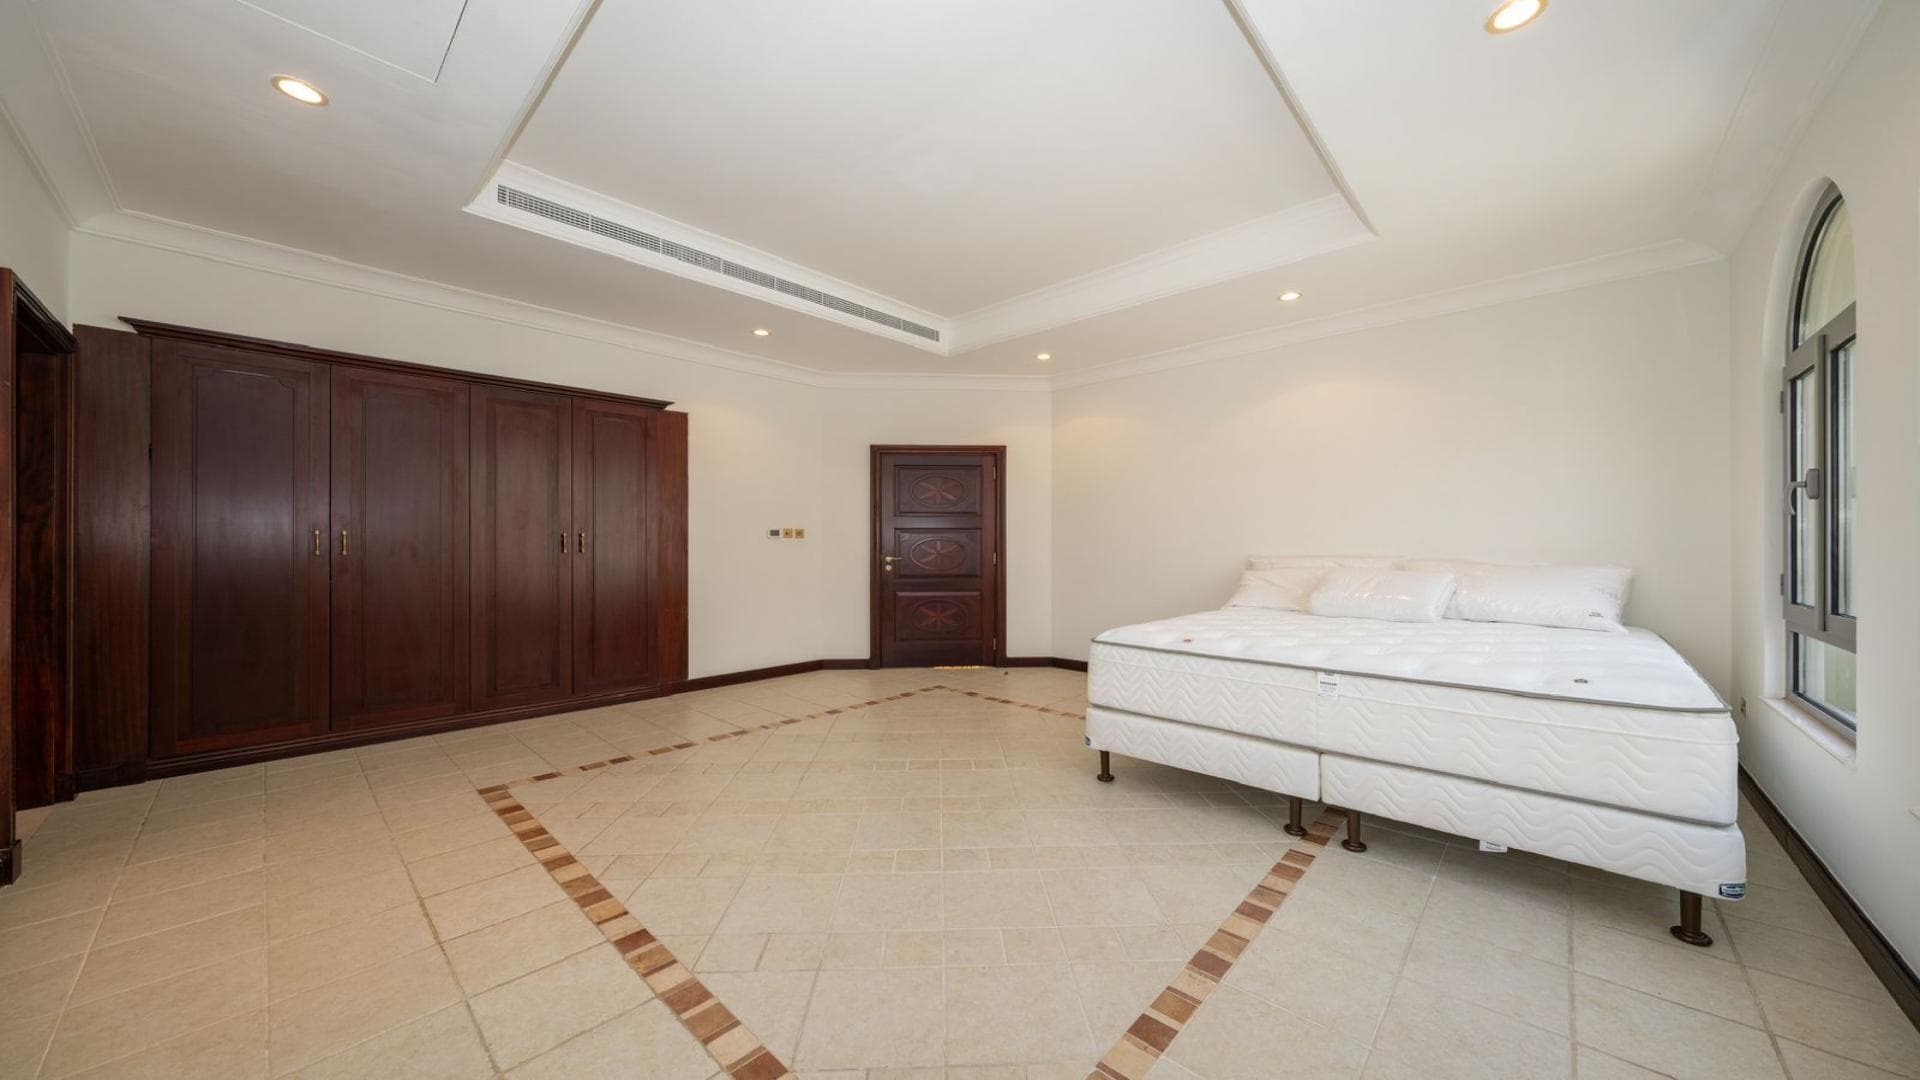 4 Bedroom Apartment For Sale Mughal Lp36896 2dd79e24876dba00.jpeg